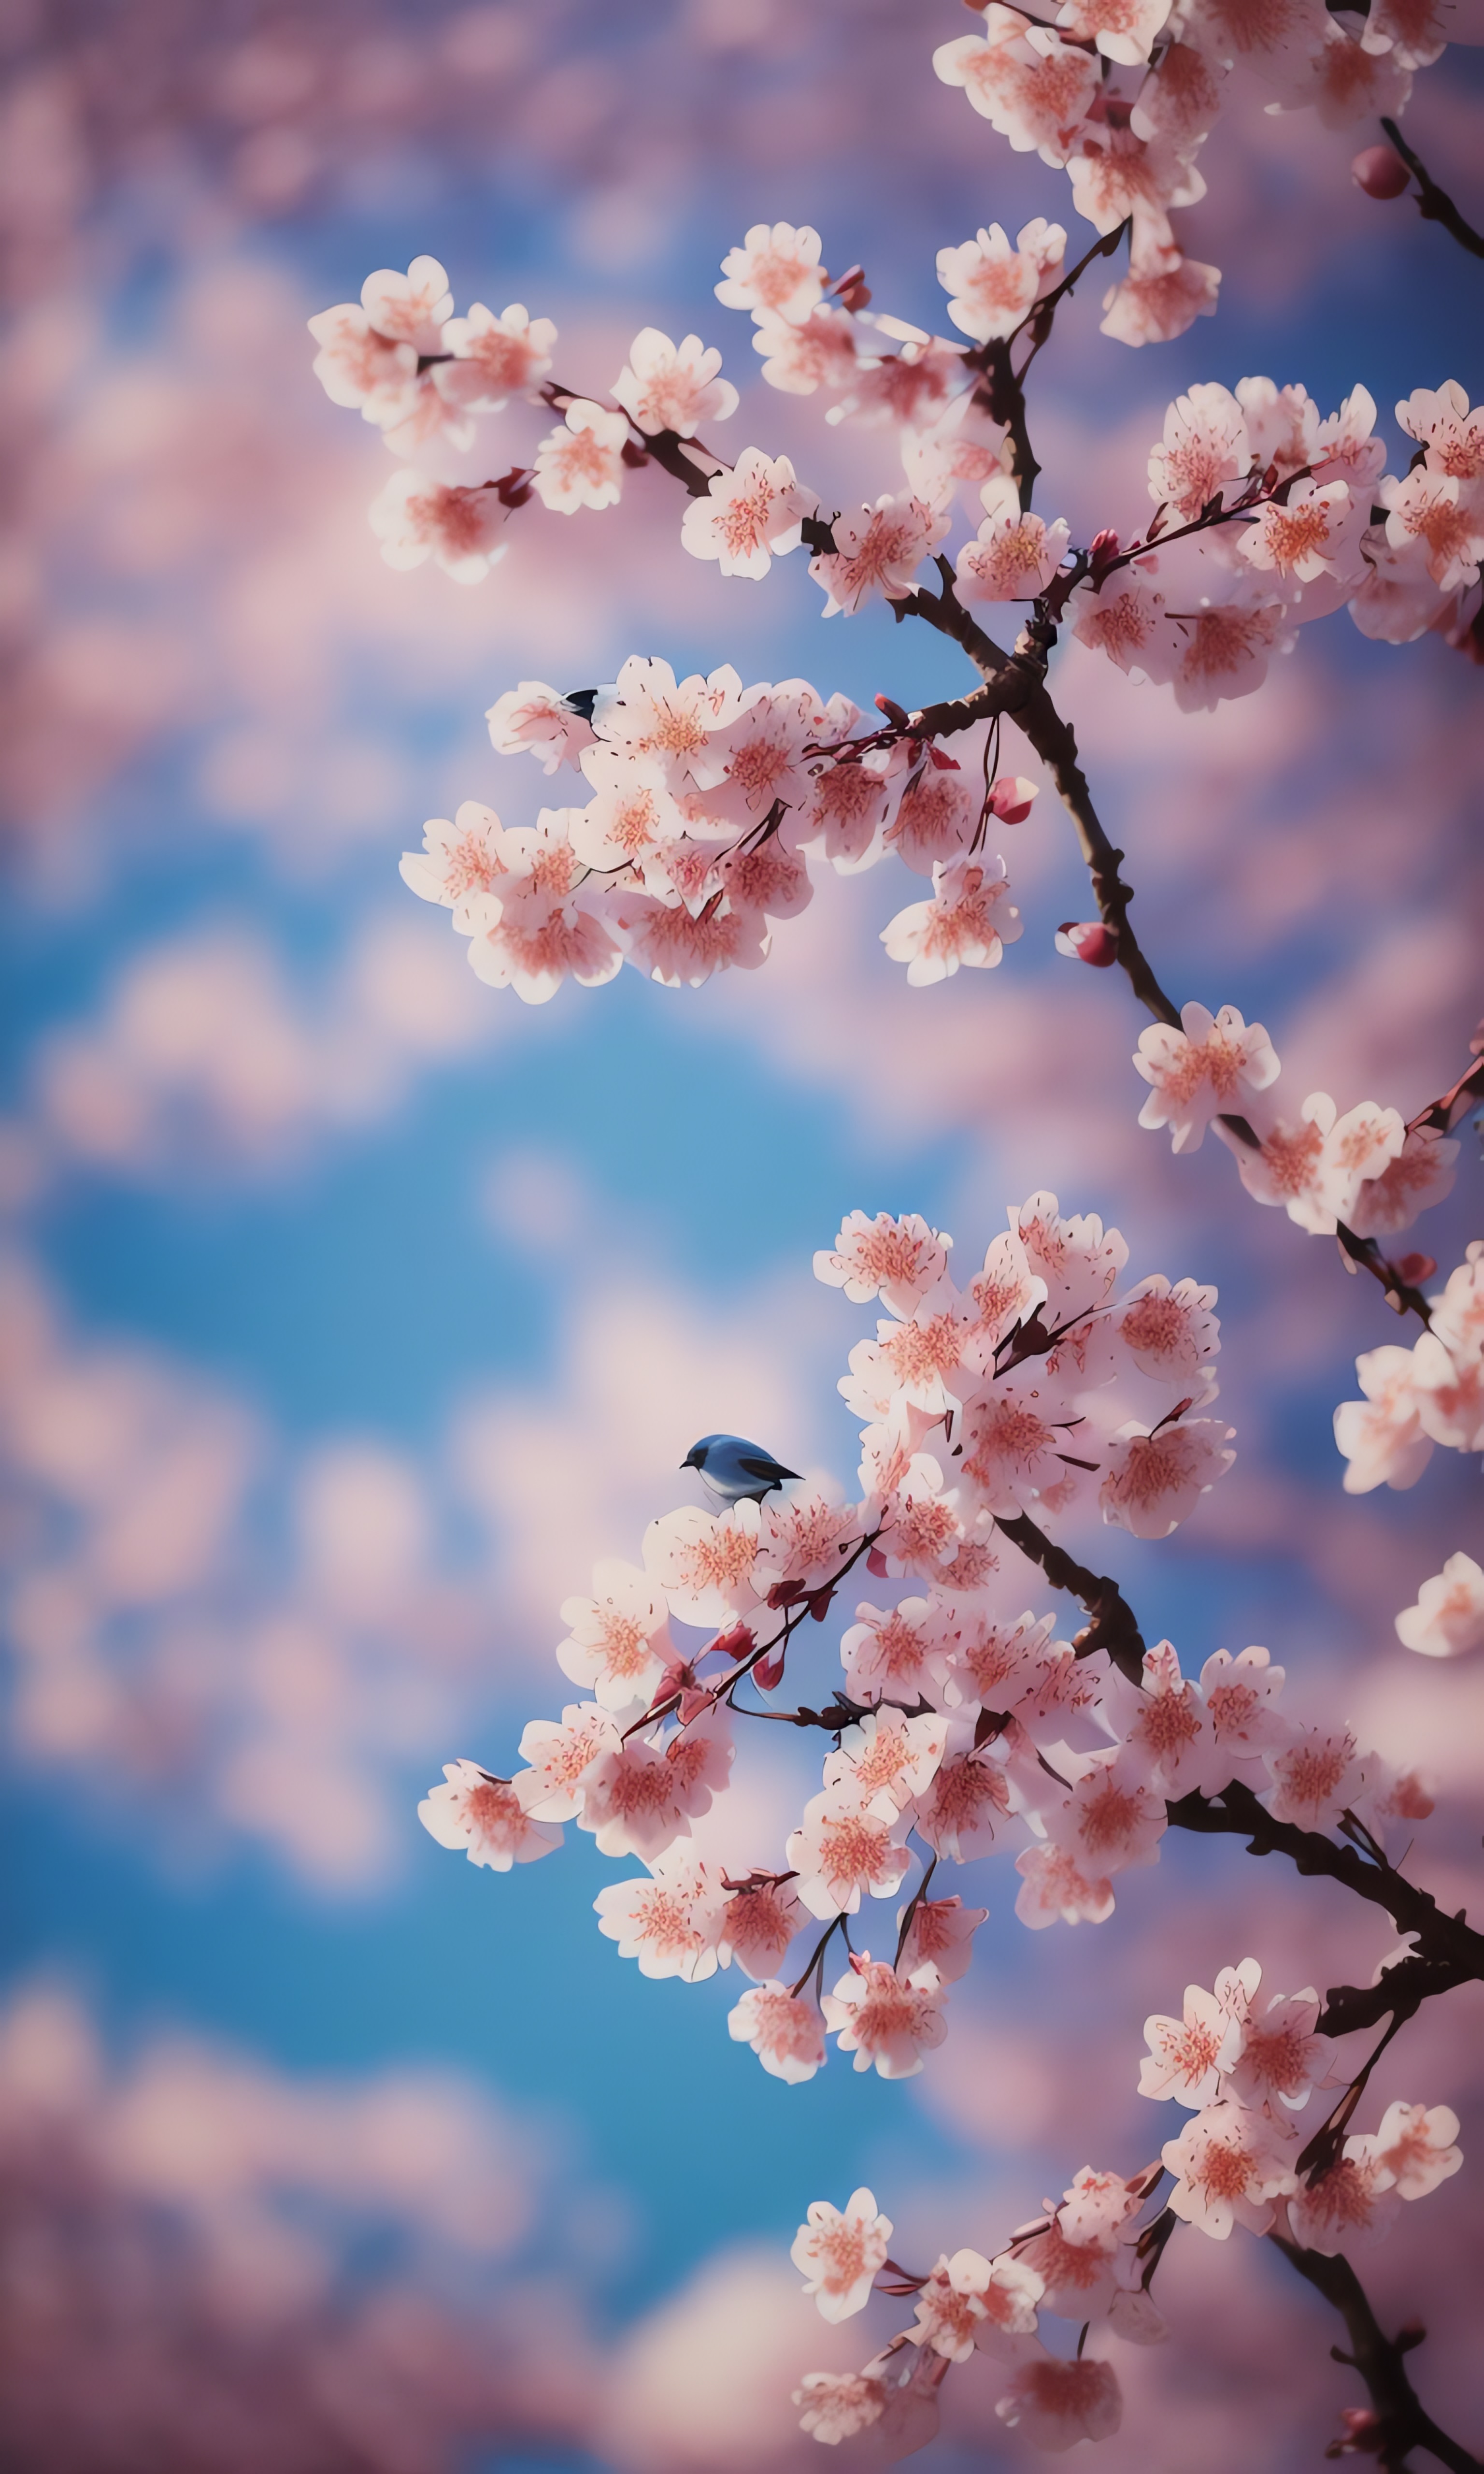 Plum blossoms against the blue sky